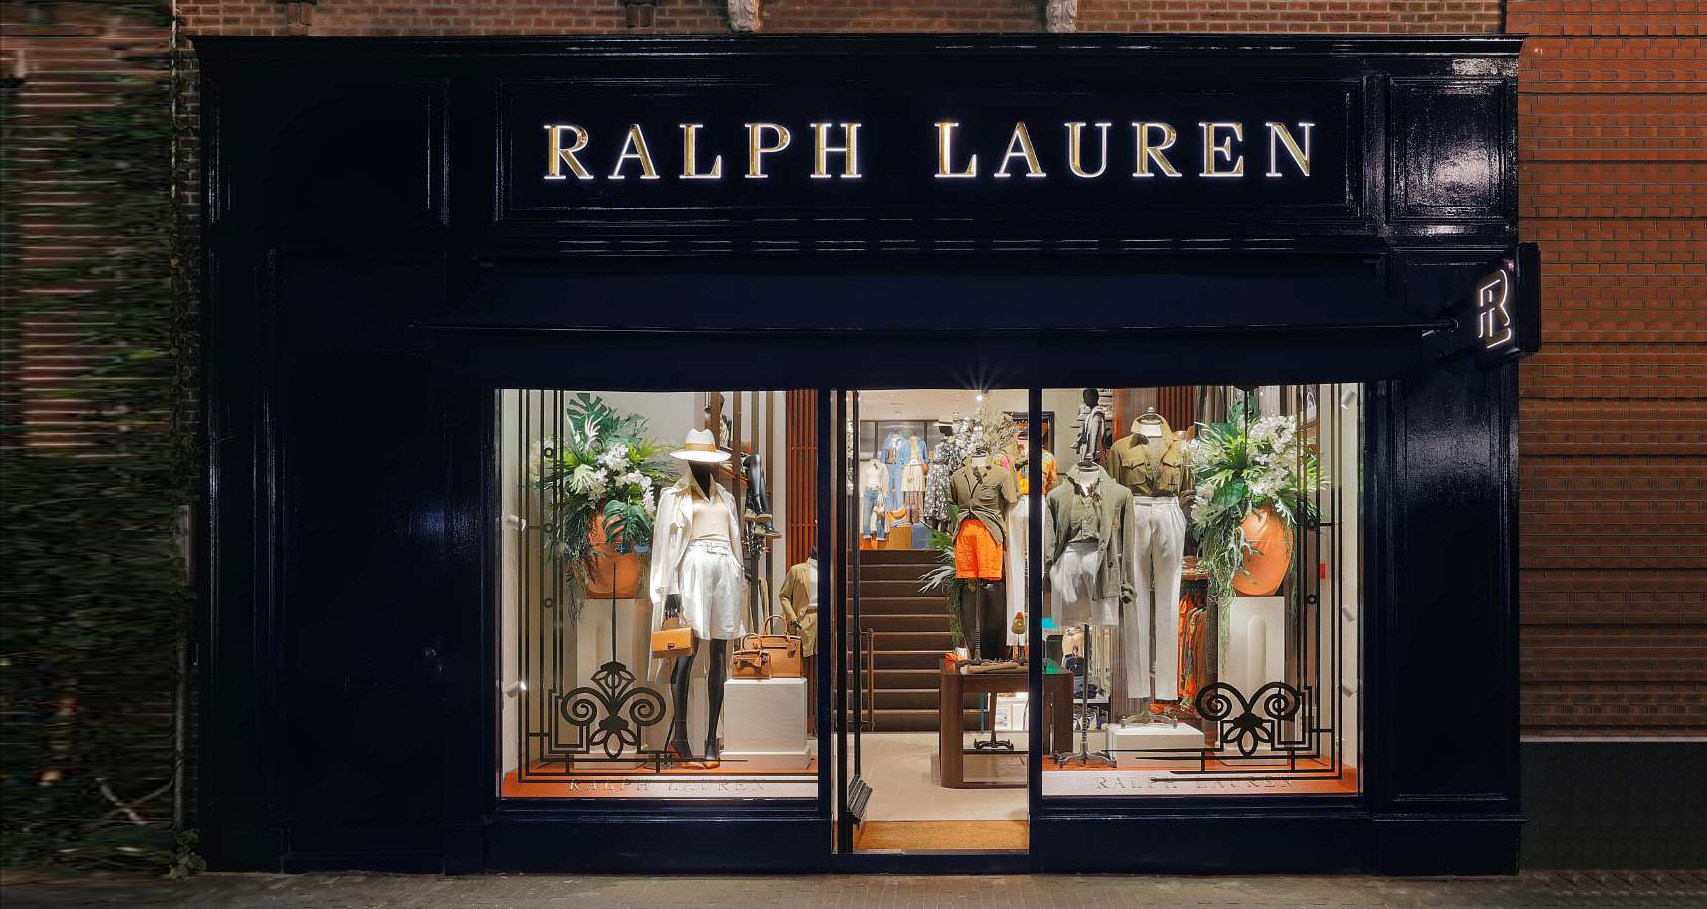 Ralph Lauren Boutique Amsterdam, The Netherlands - SPI